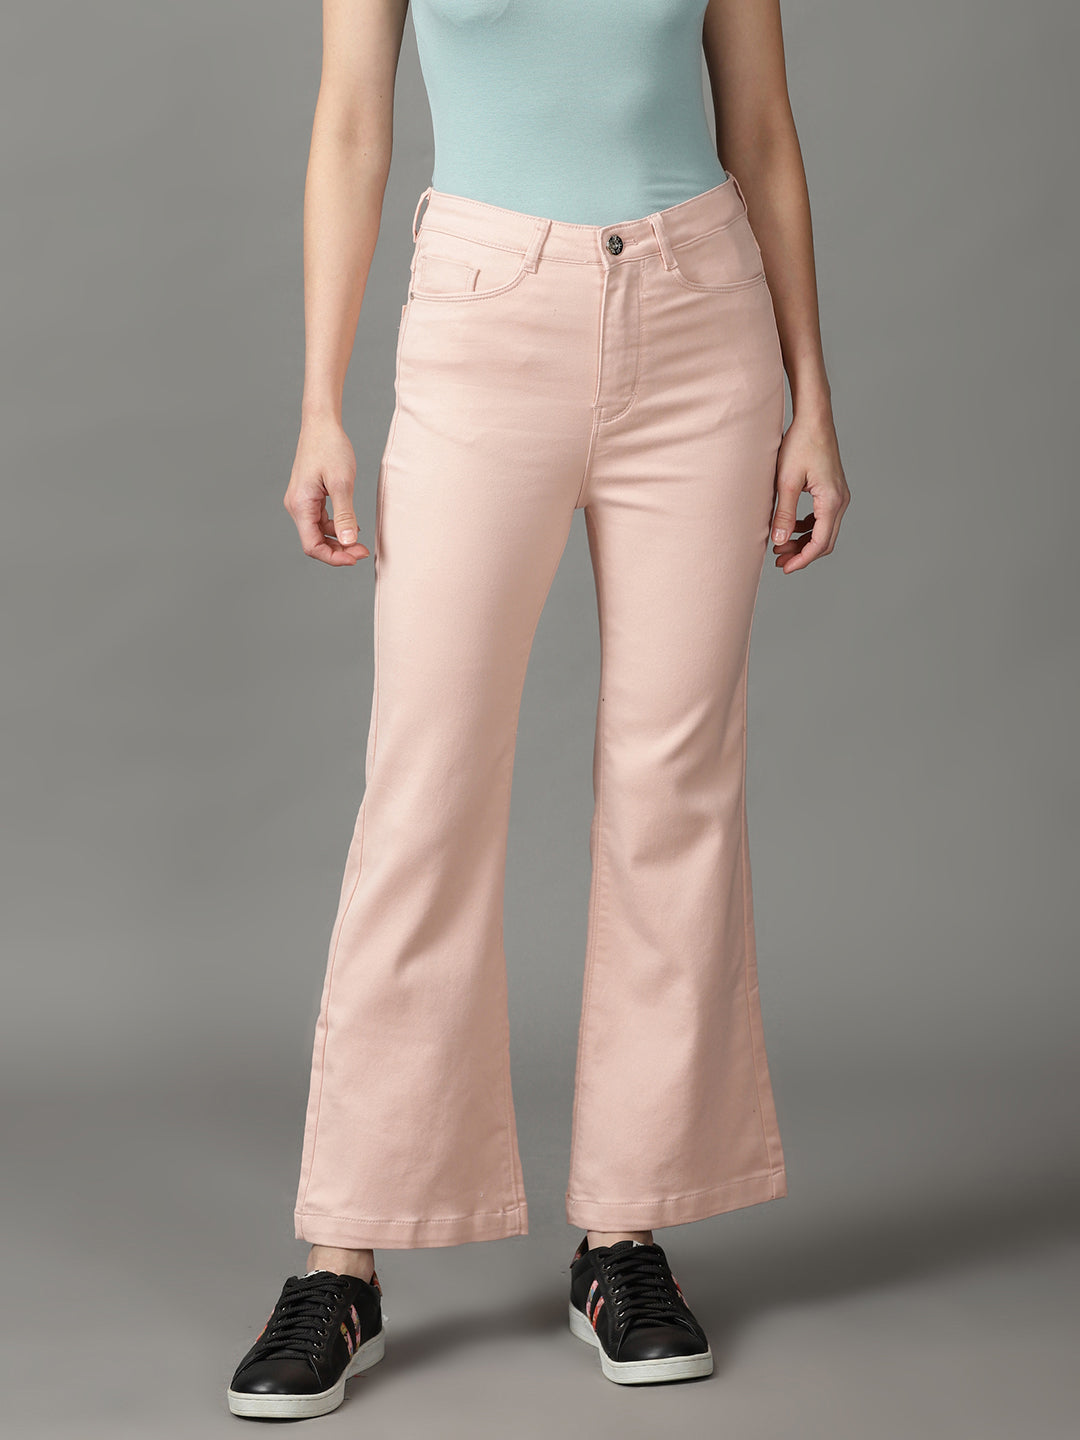 Women's Peach Solid Bootcut Denim Jeans